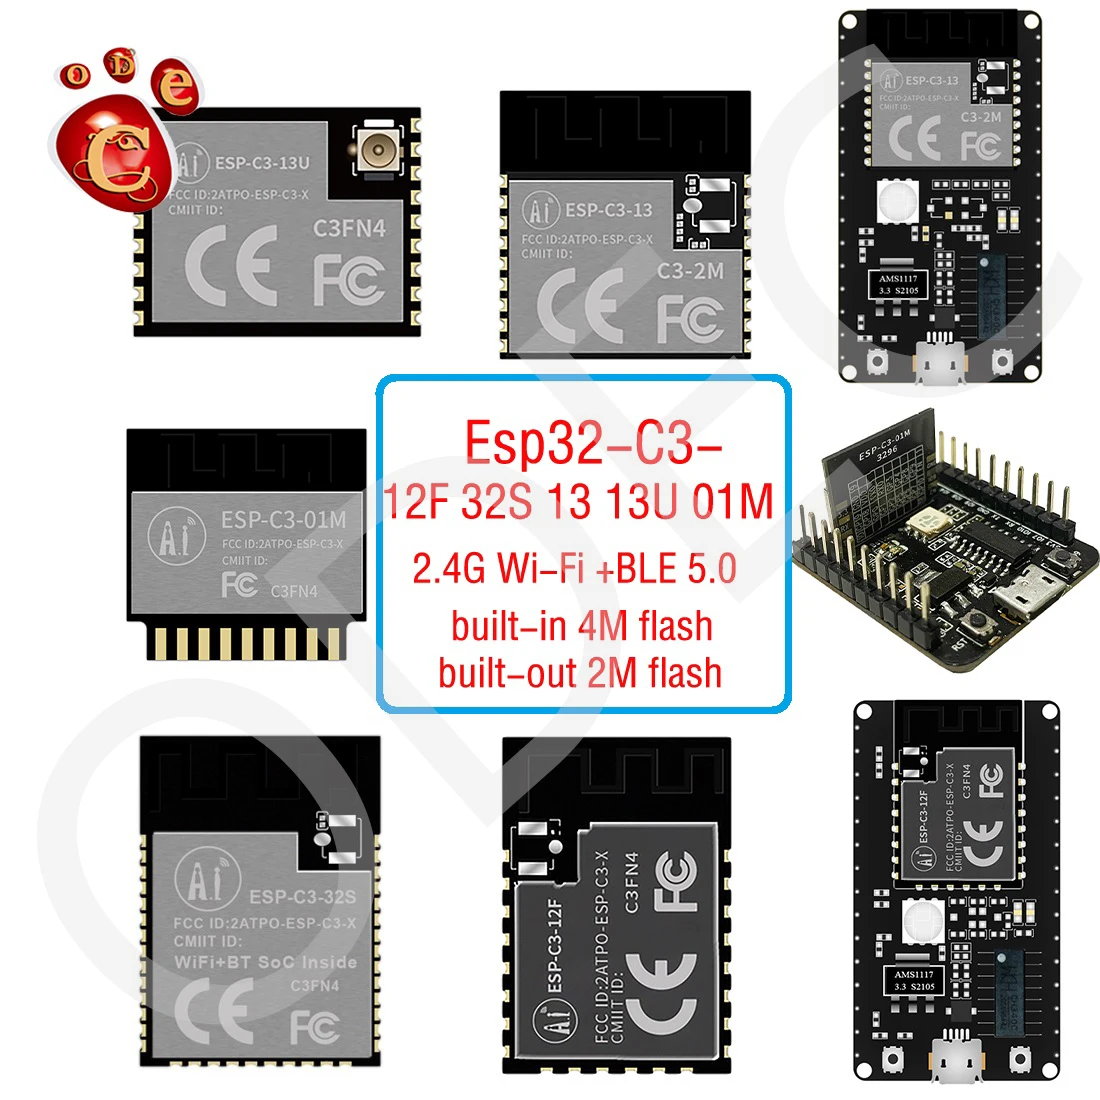 

ESP32-C3 ESP-C3 ESPC3 C3S 12F 13 13U 01M 32S low cost WiFi+ Bluetooth 5.0 series module development board ESP-C3-13 ESP-C3-01M